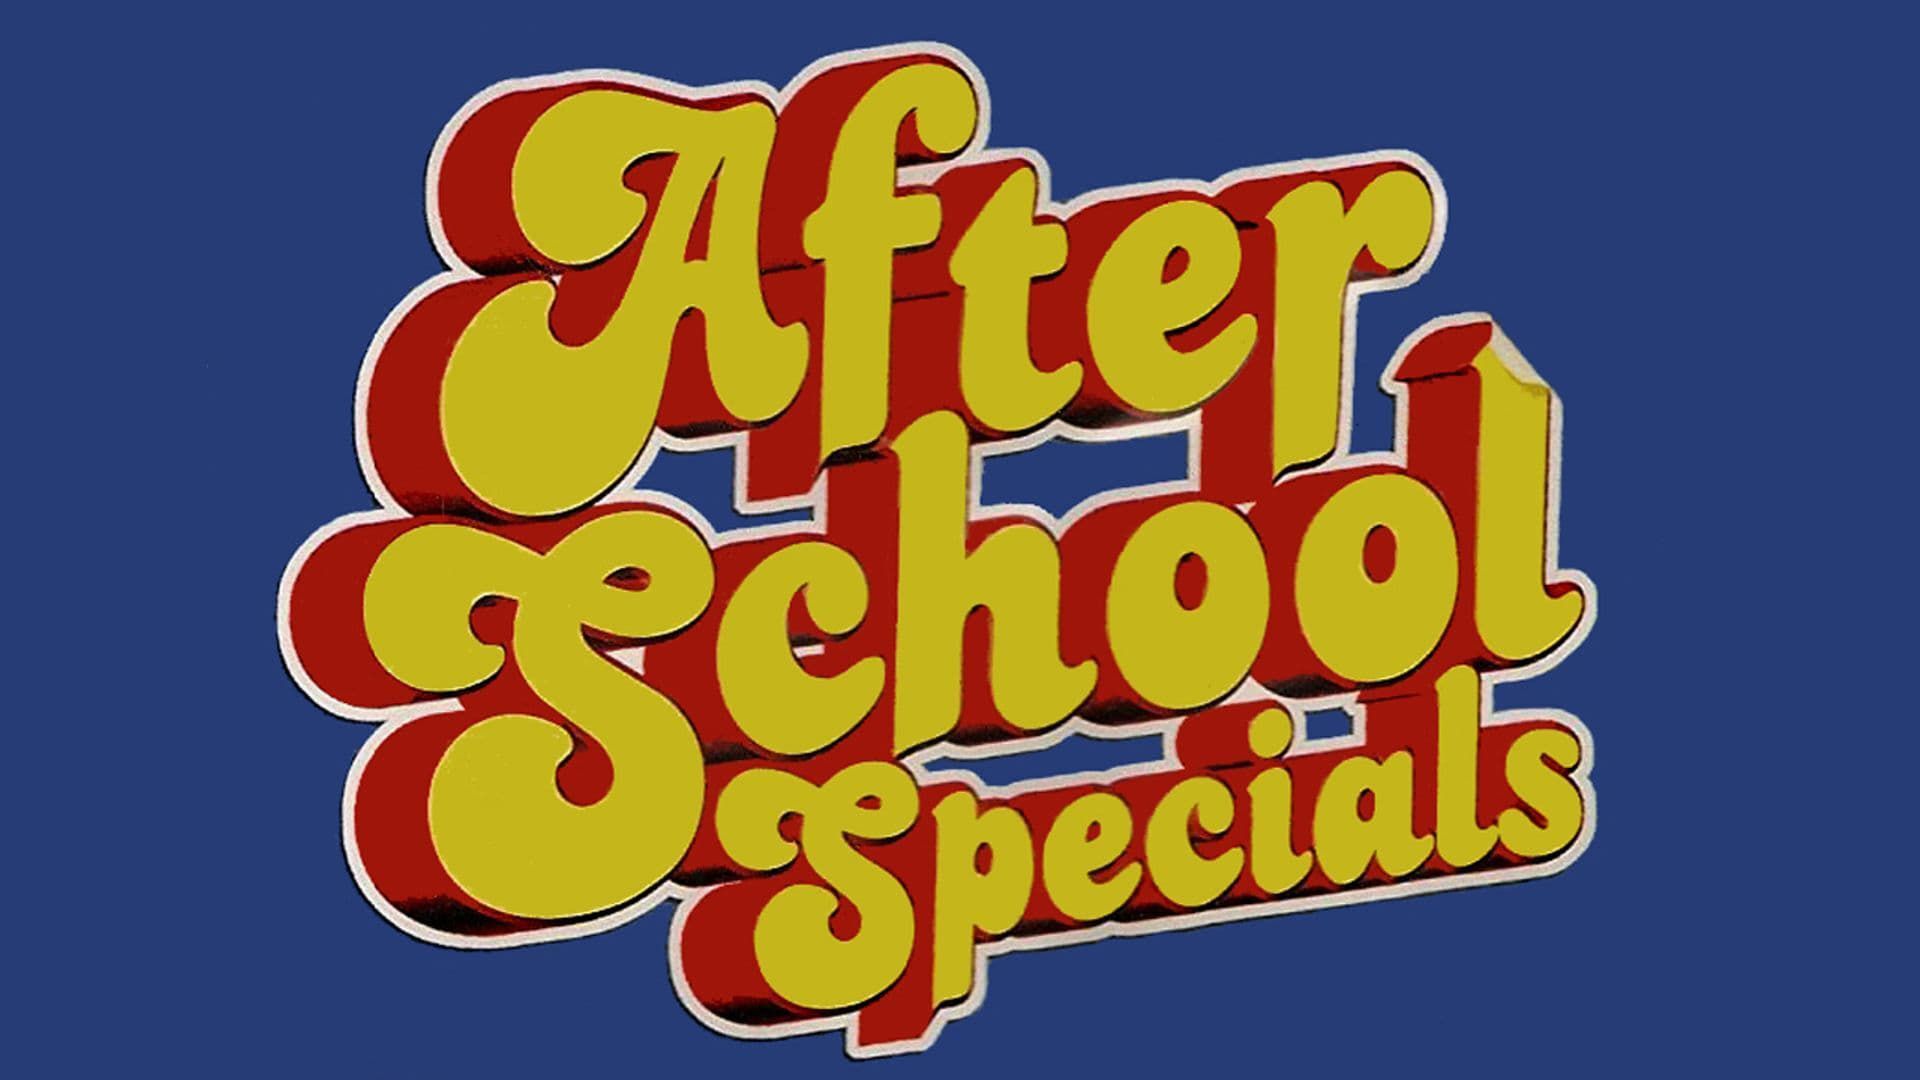 ABC Afterschool Specials background